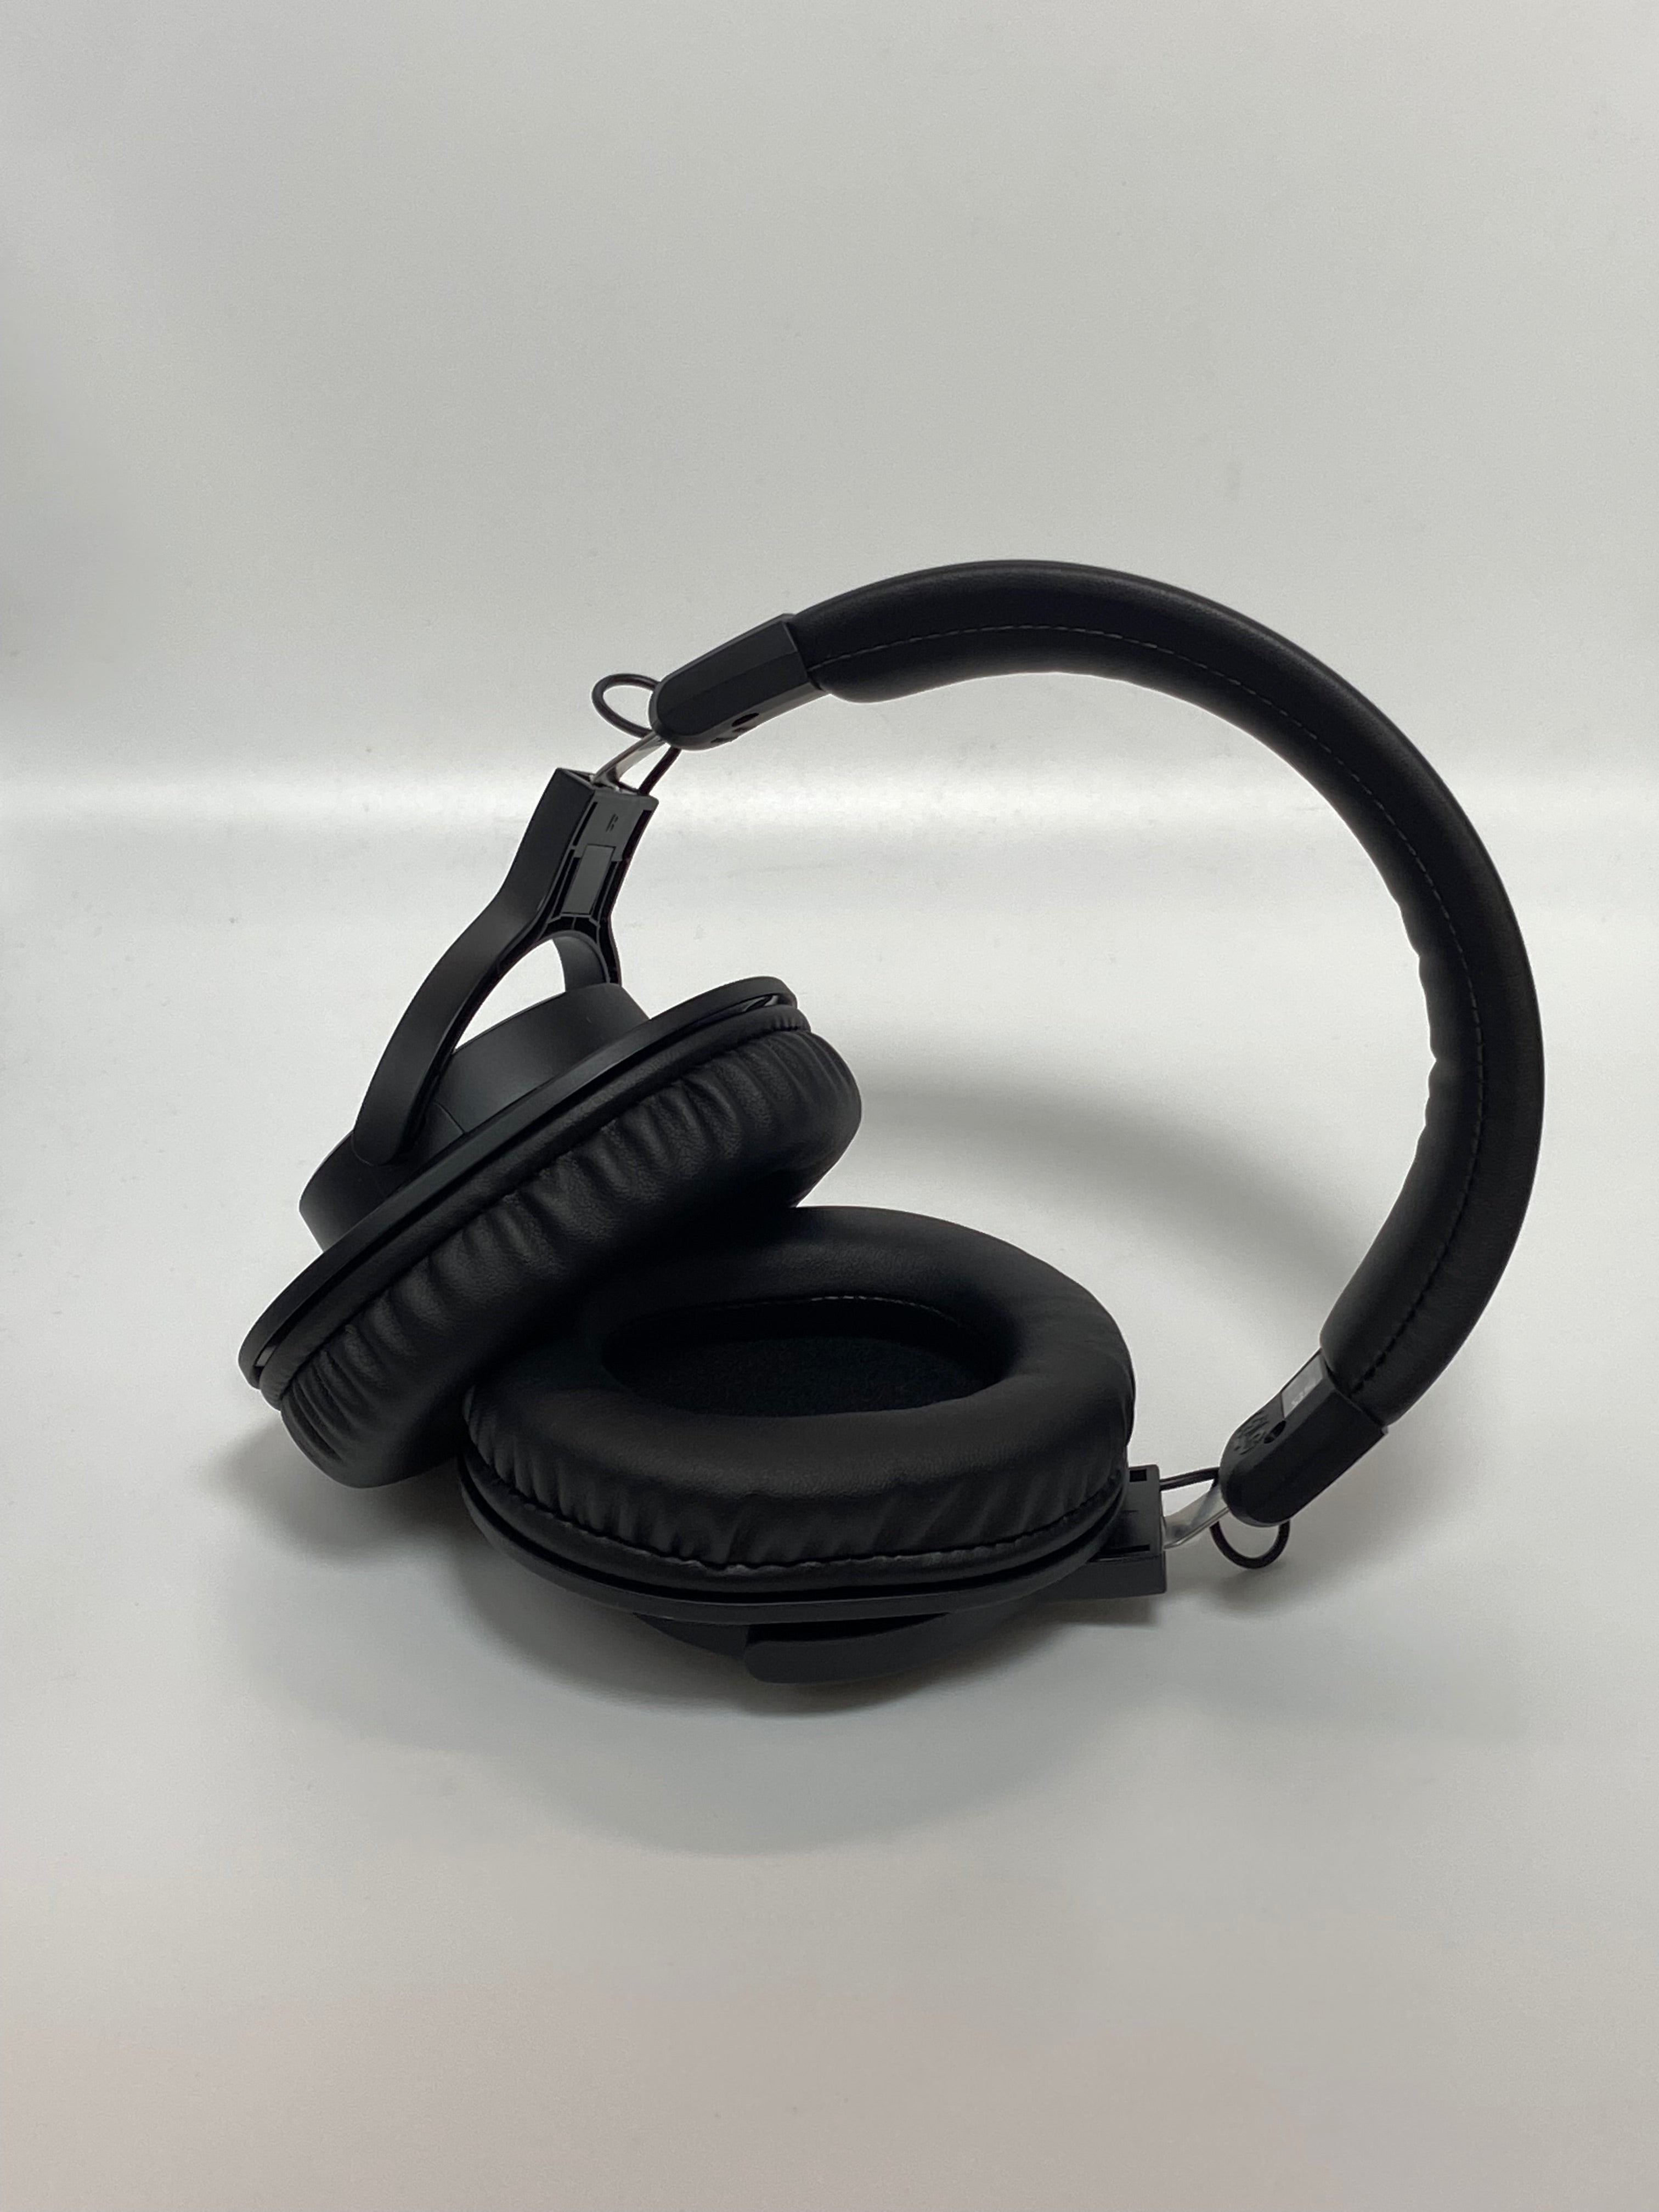 Audio-Technica ATH-M20xBT Auriculares inalámbricos